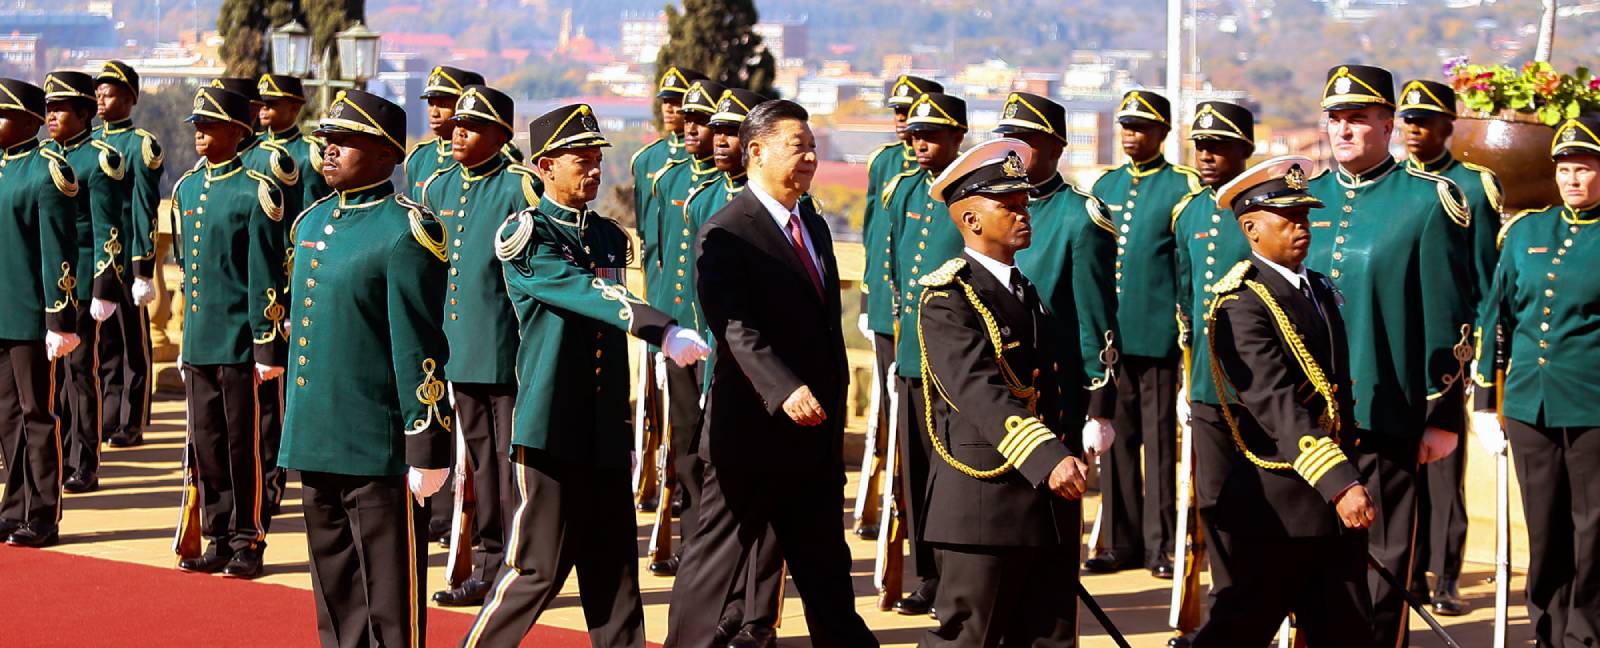 Xi Jinping inspects a military honor guard in Pretoria South Africa.